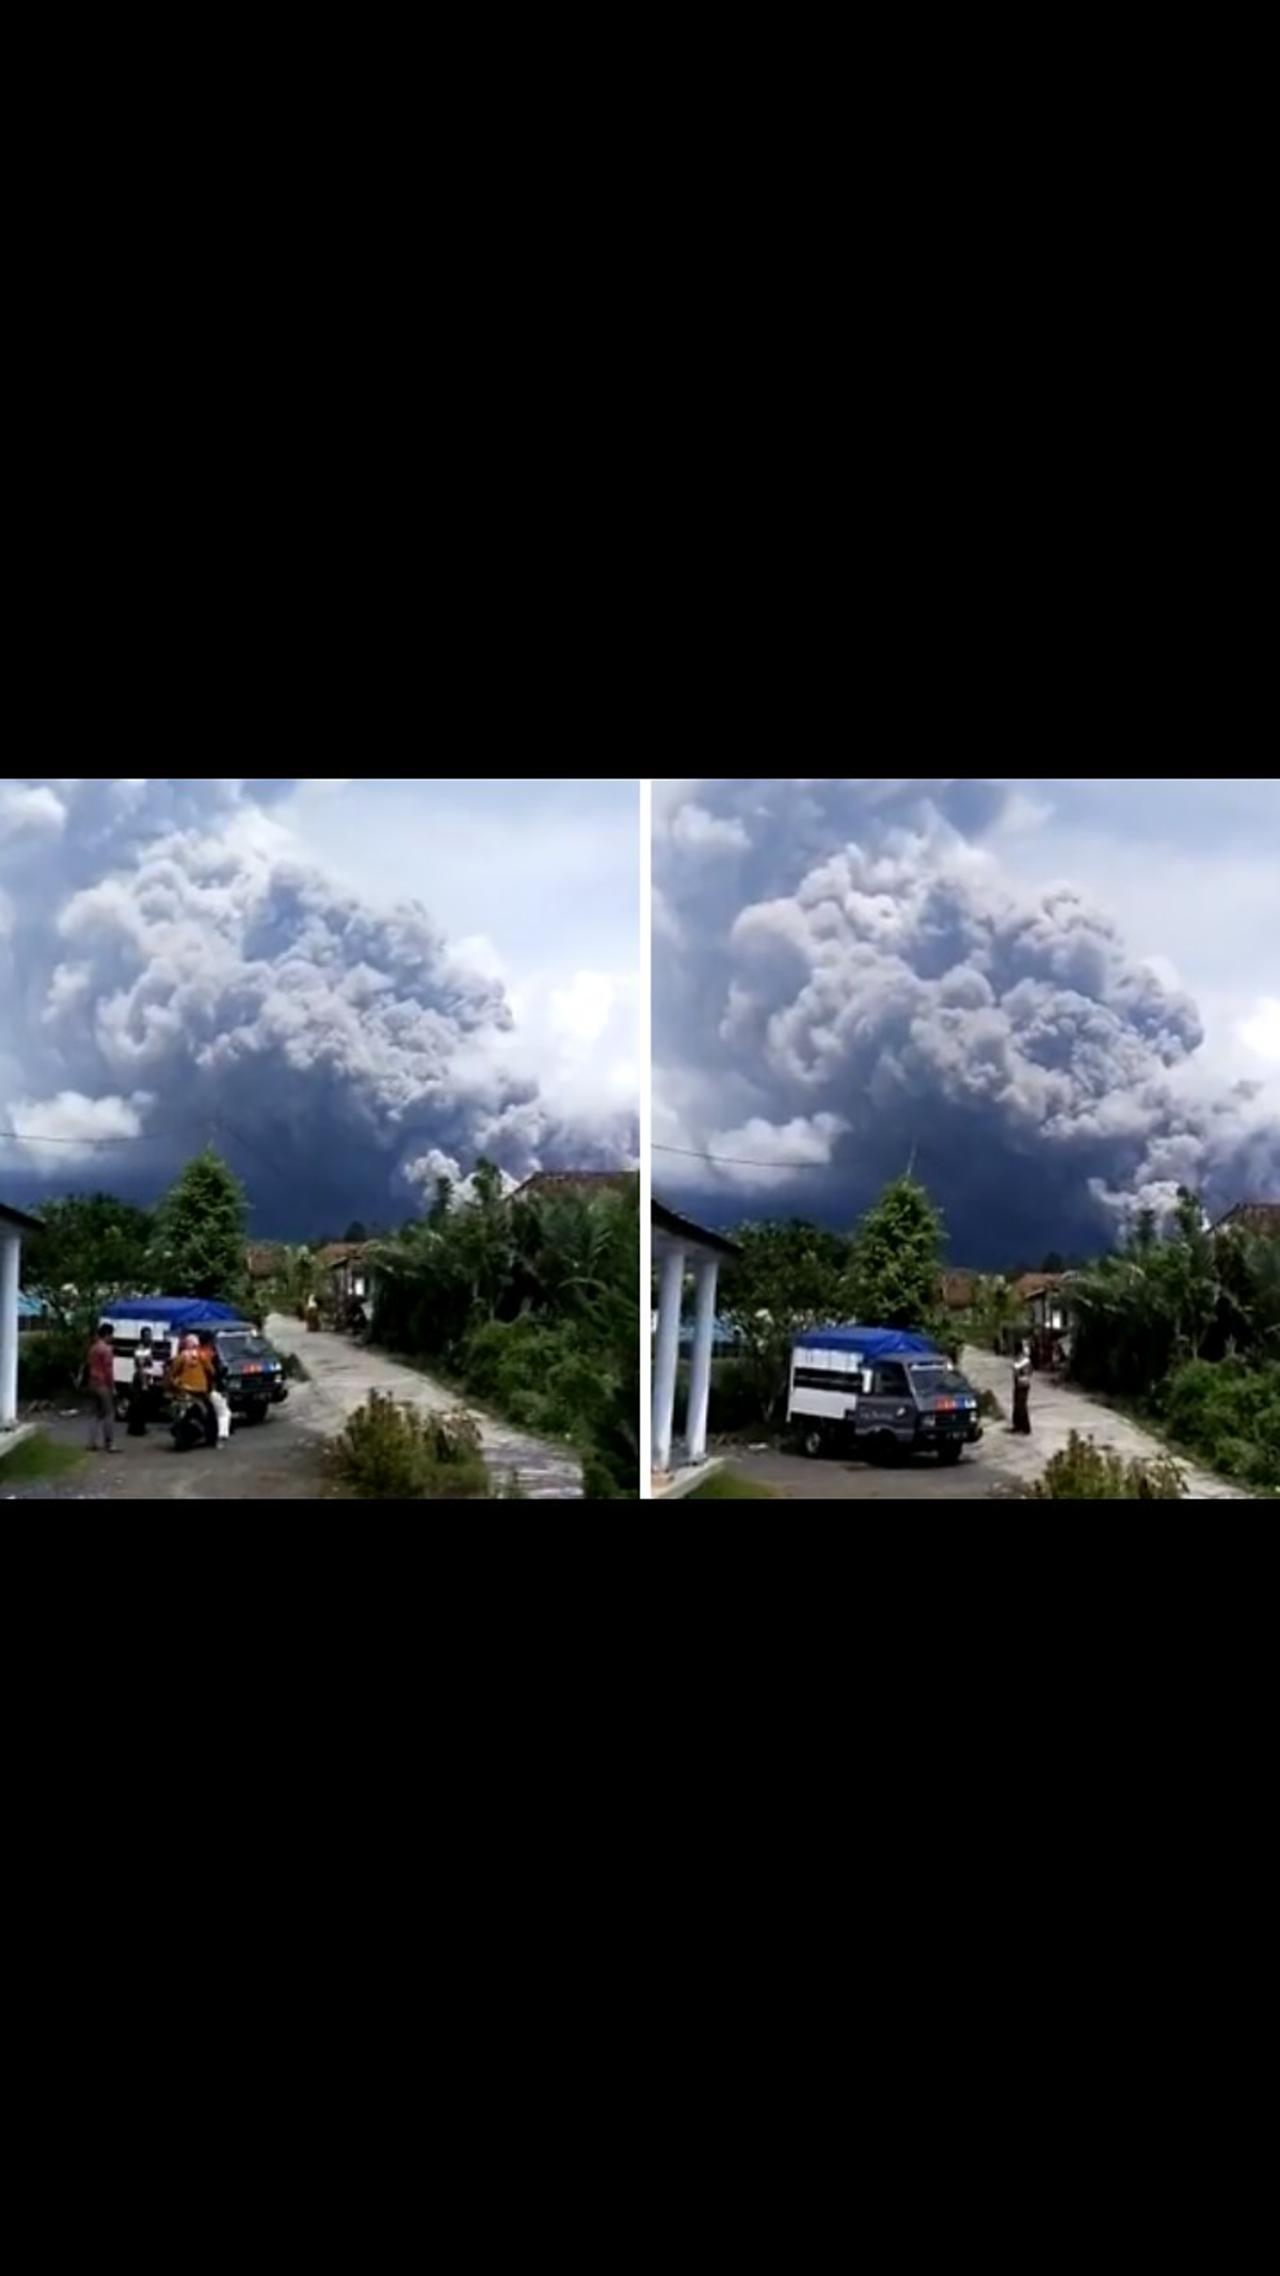 Semeru Volcano in Indonesia erupts into the sky